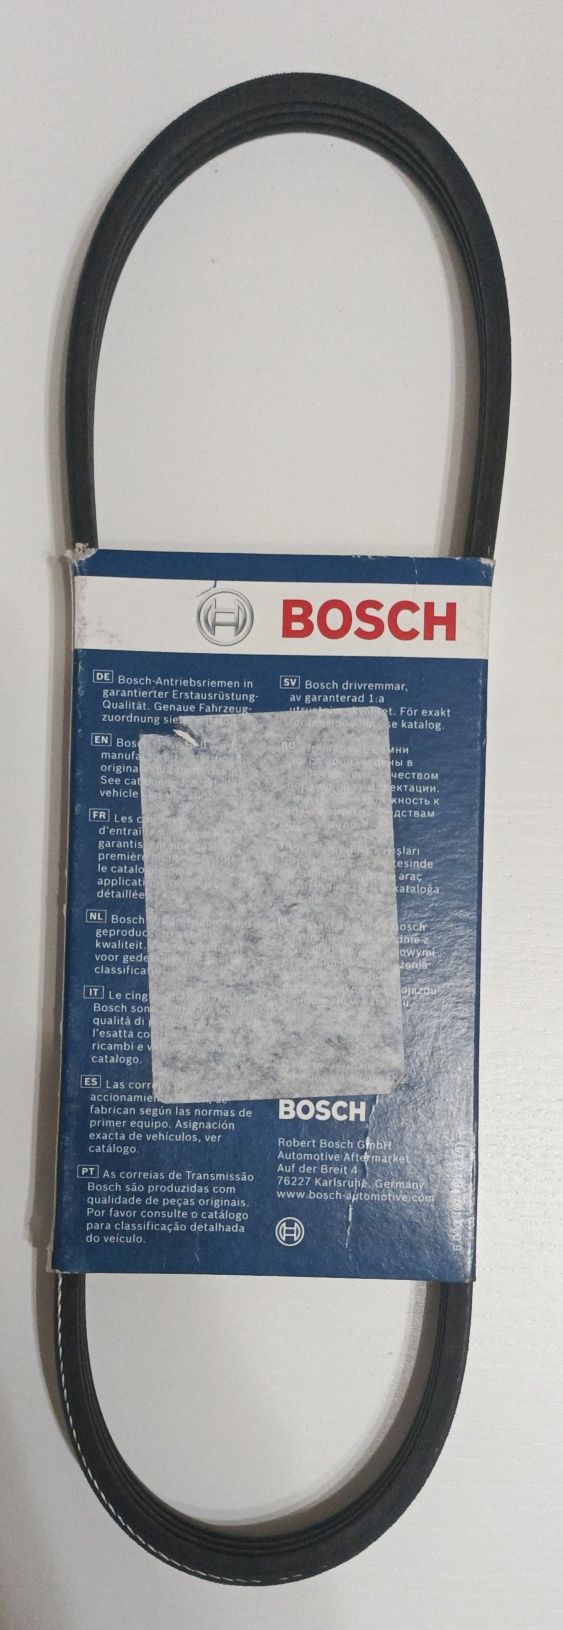 Correia do alternador Bosch 4 PK 668 (Nova)